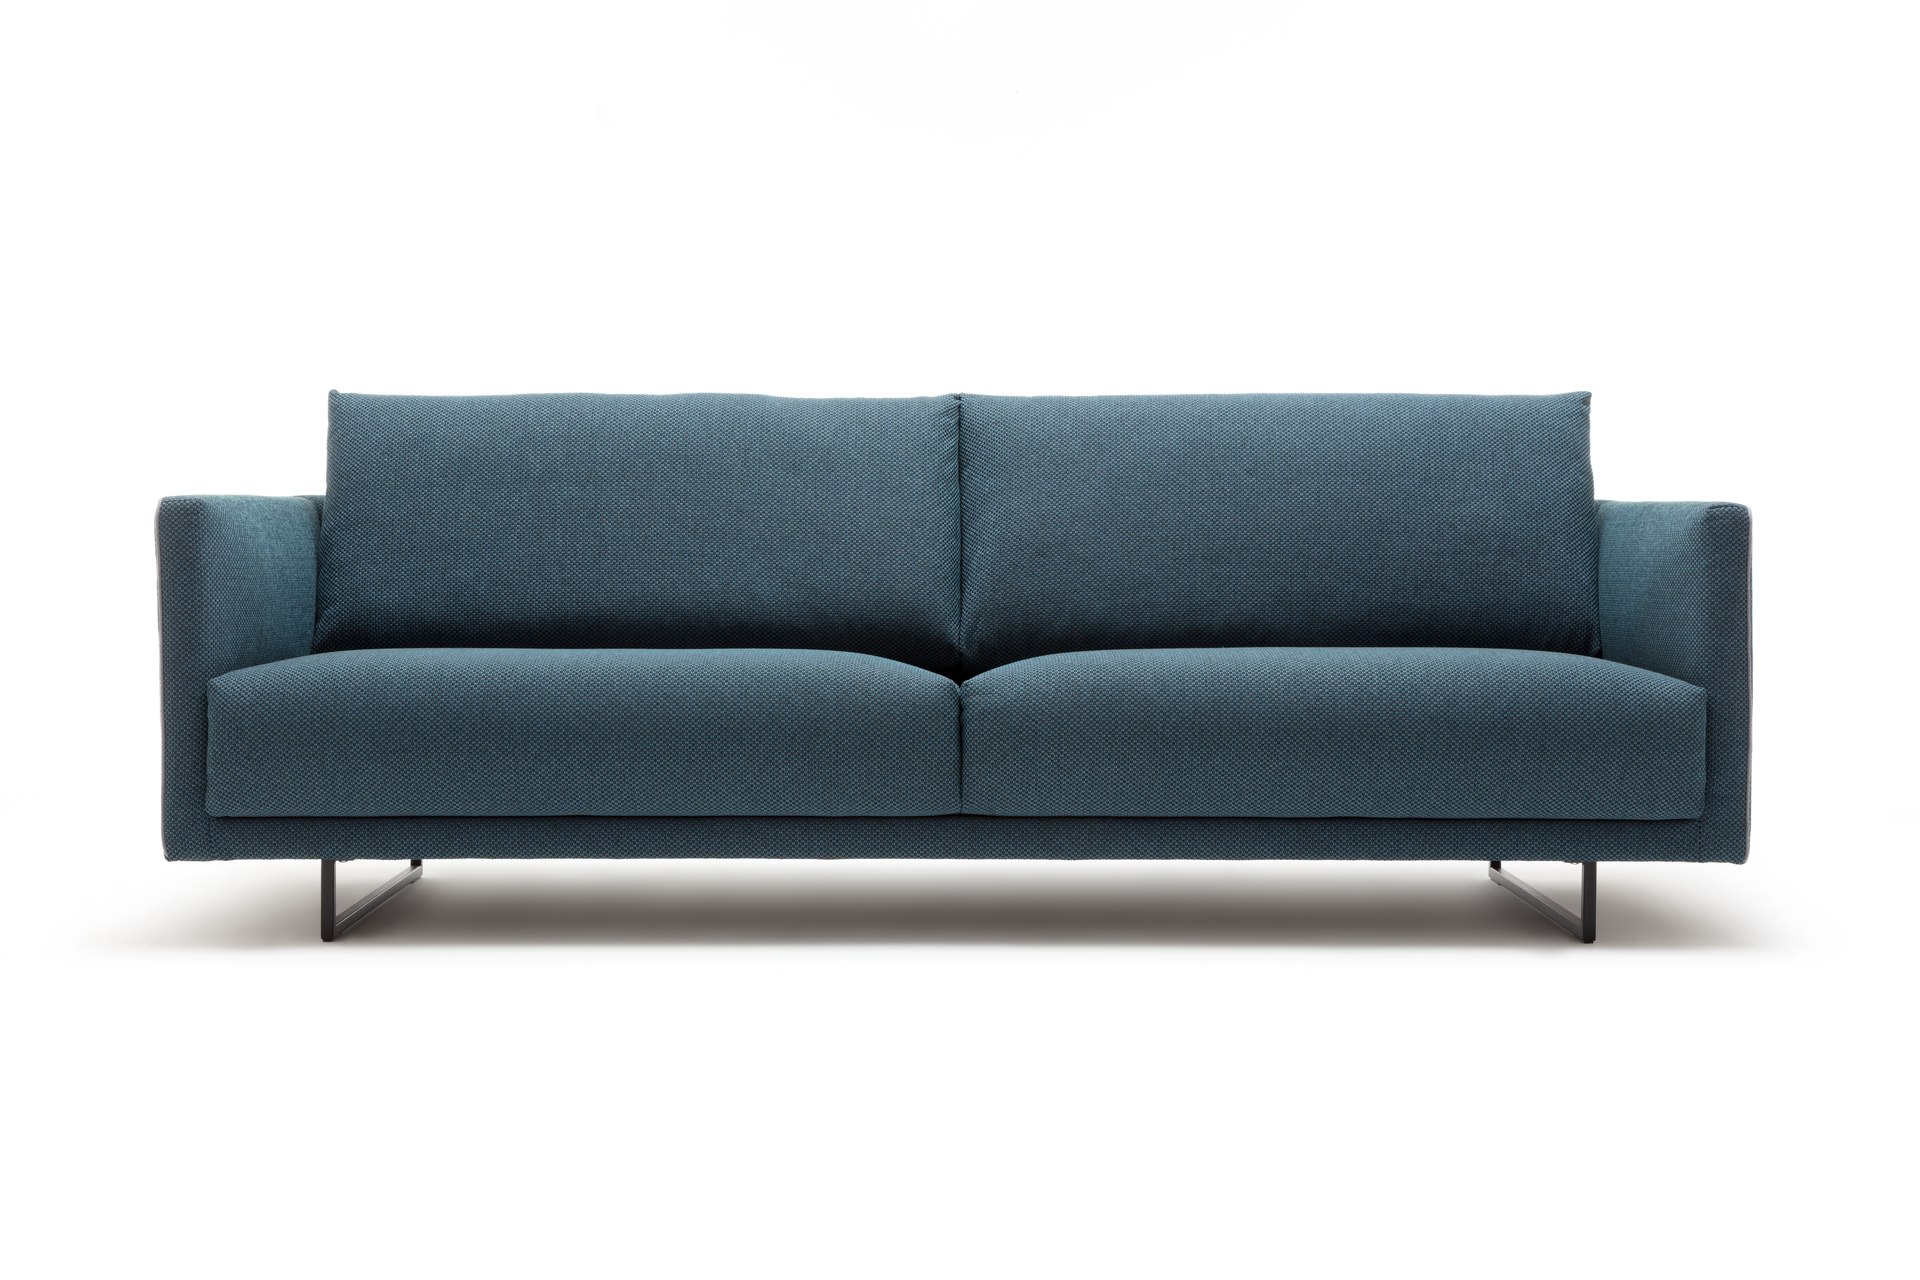 Freistil by Rolf Benz 133 sofa in blue fabric